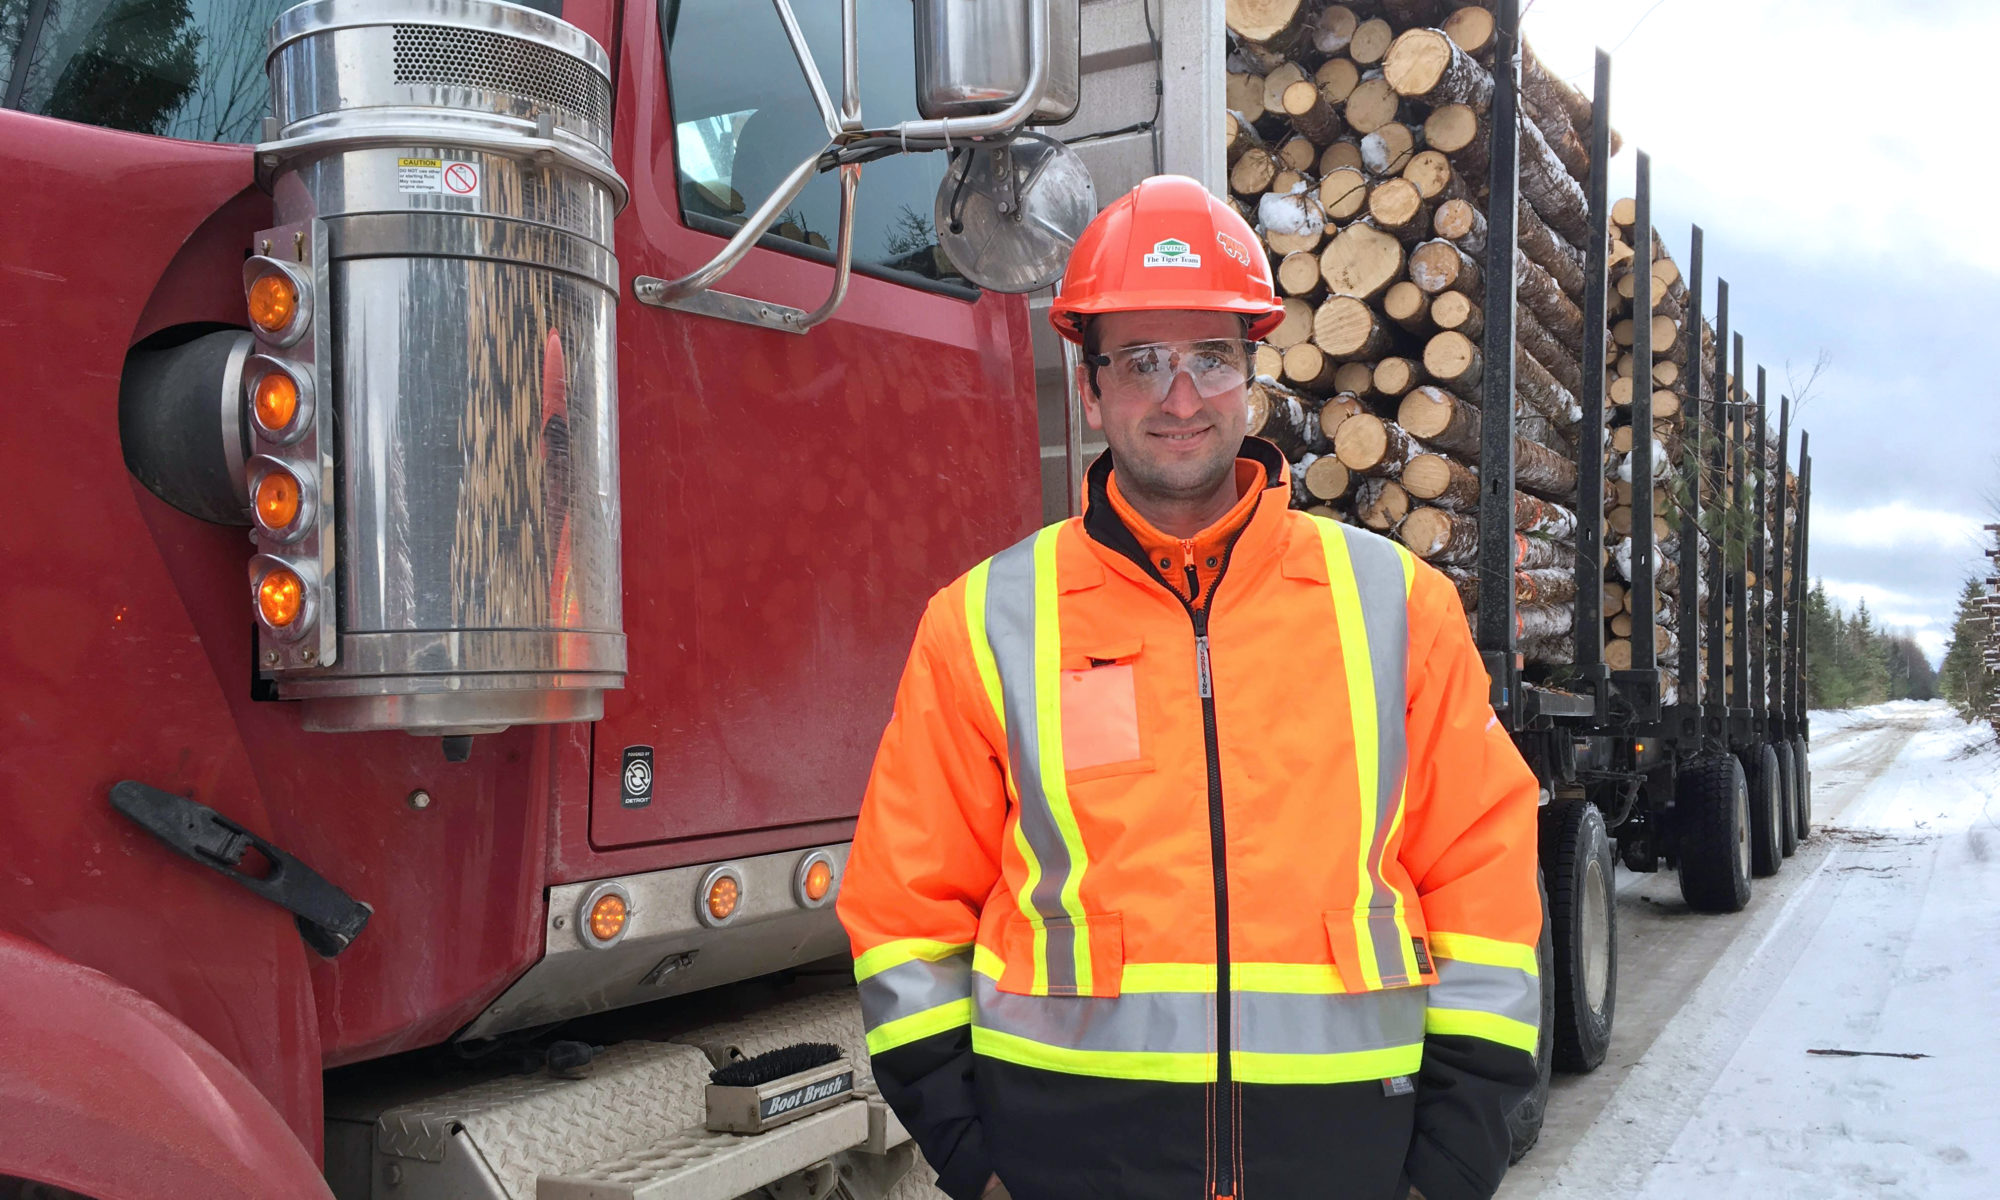 Ukrainian Taras Tovstiy works as a trucker in Chipman, N.B. for J.D. Irving forestry operations.